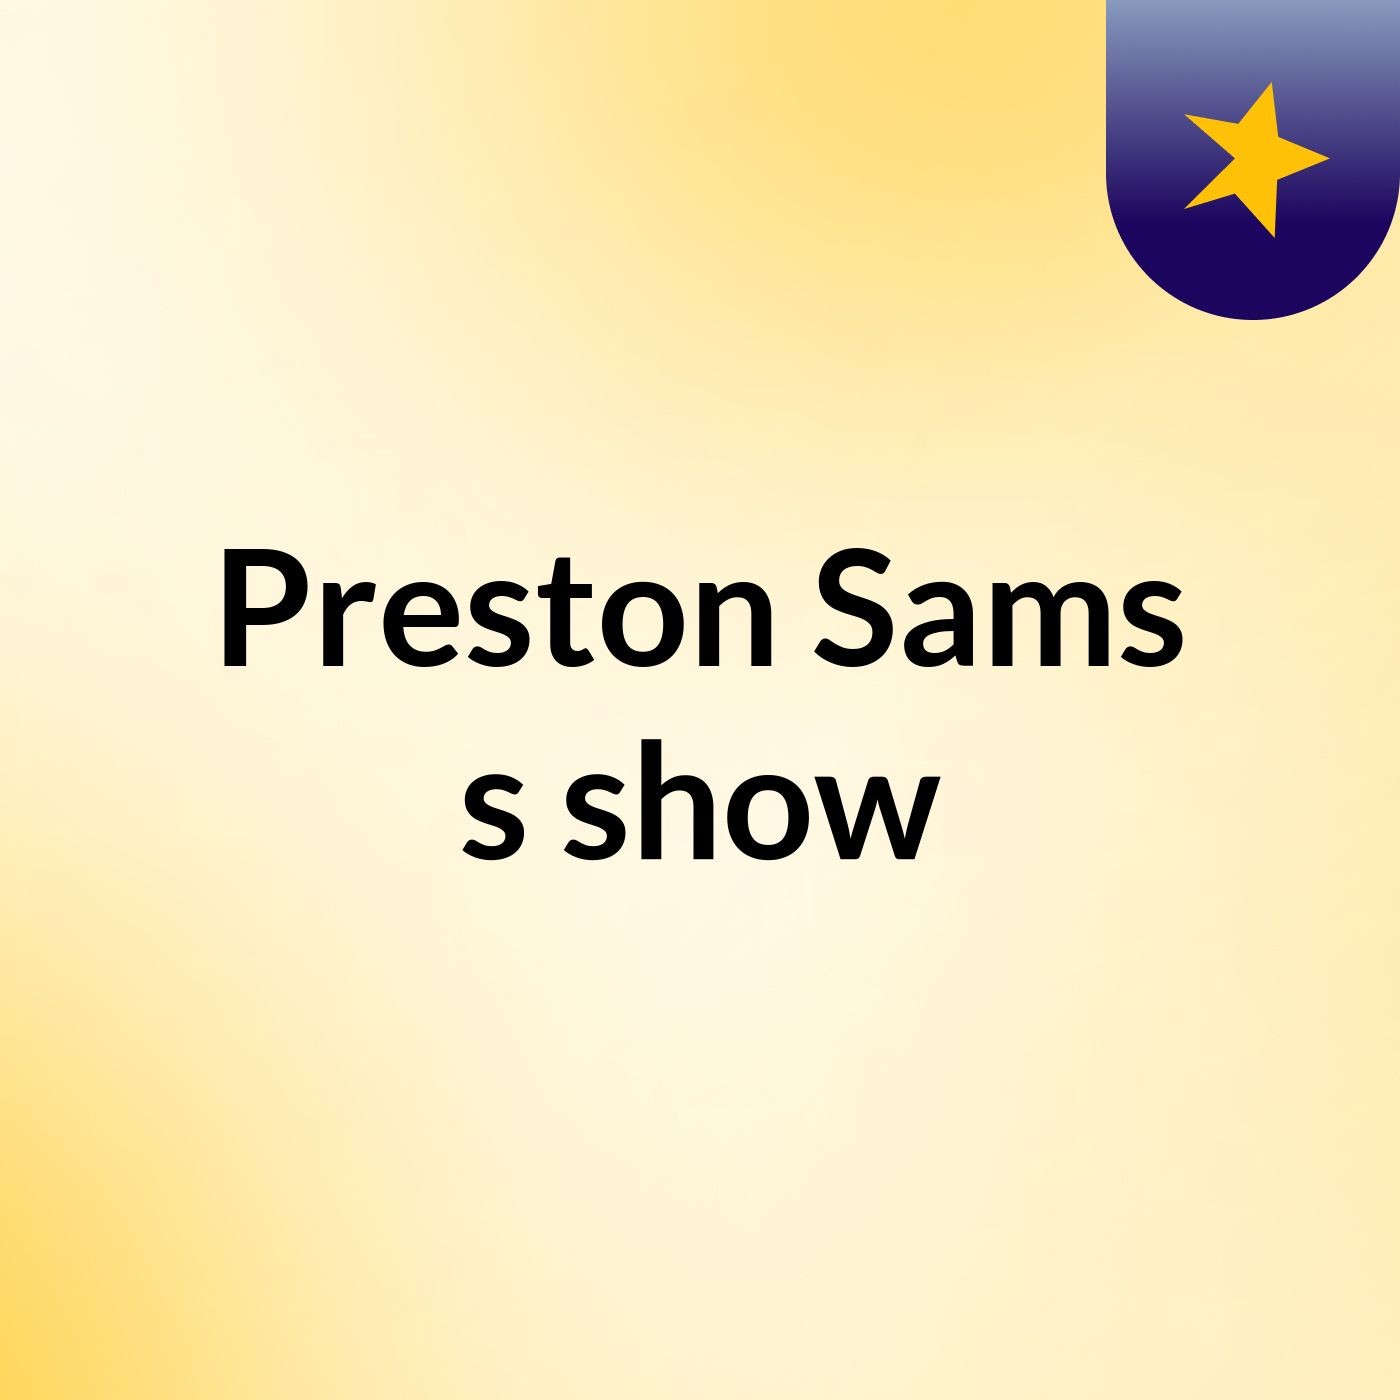 Preston Sams's show